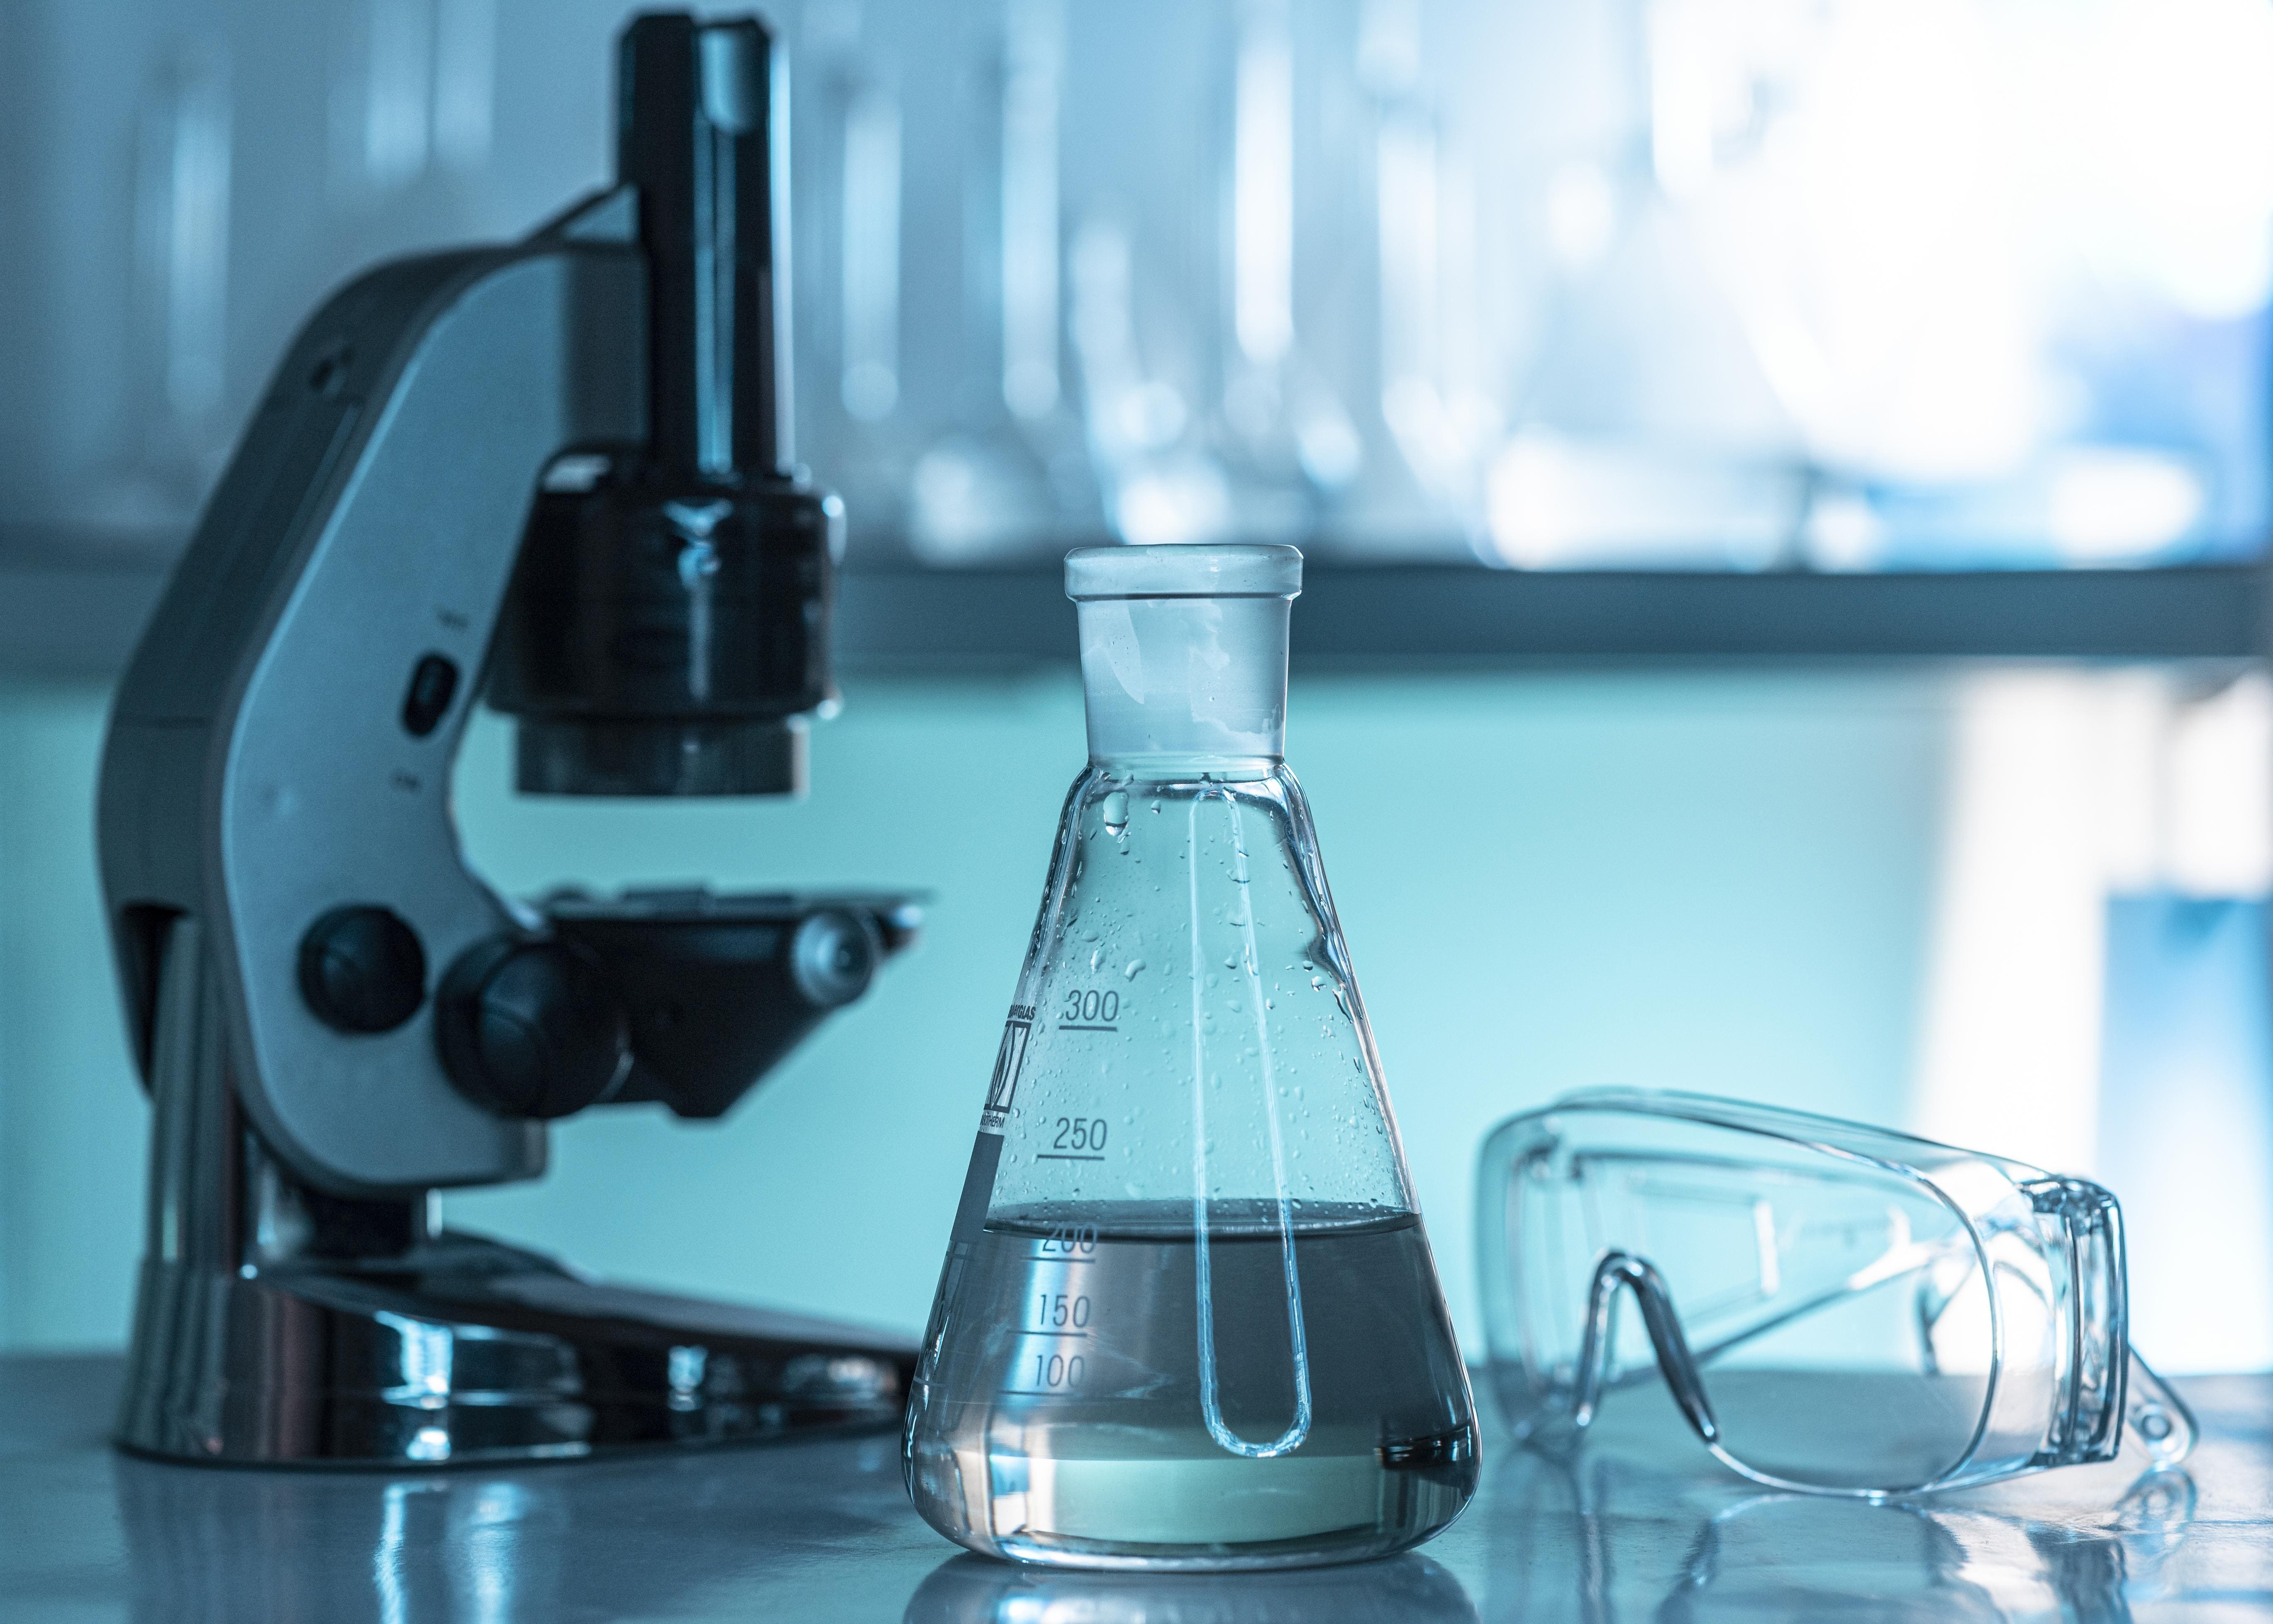 Laboratory equipment market trends until 2025